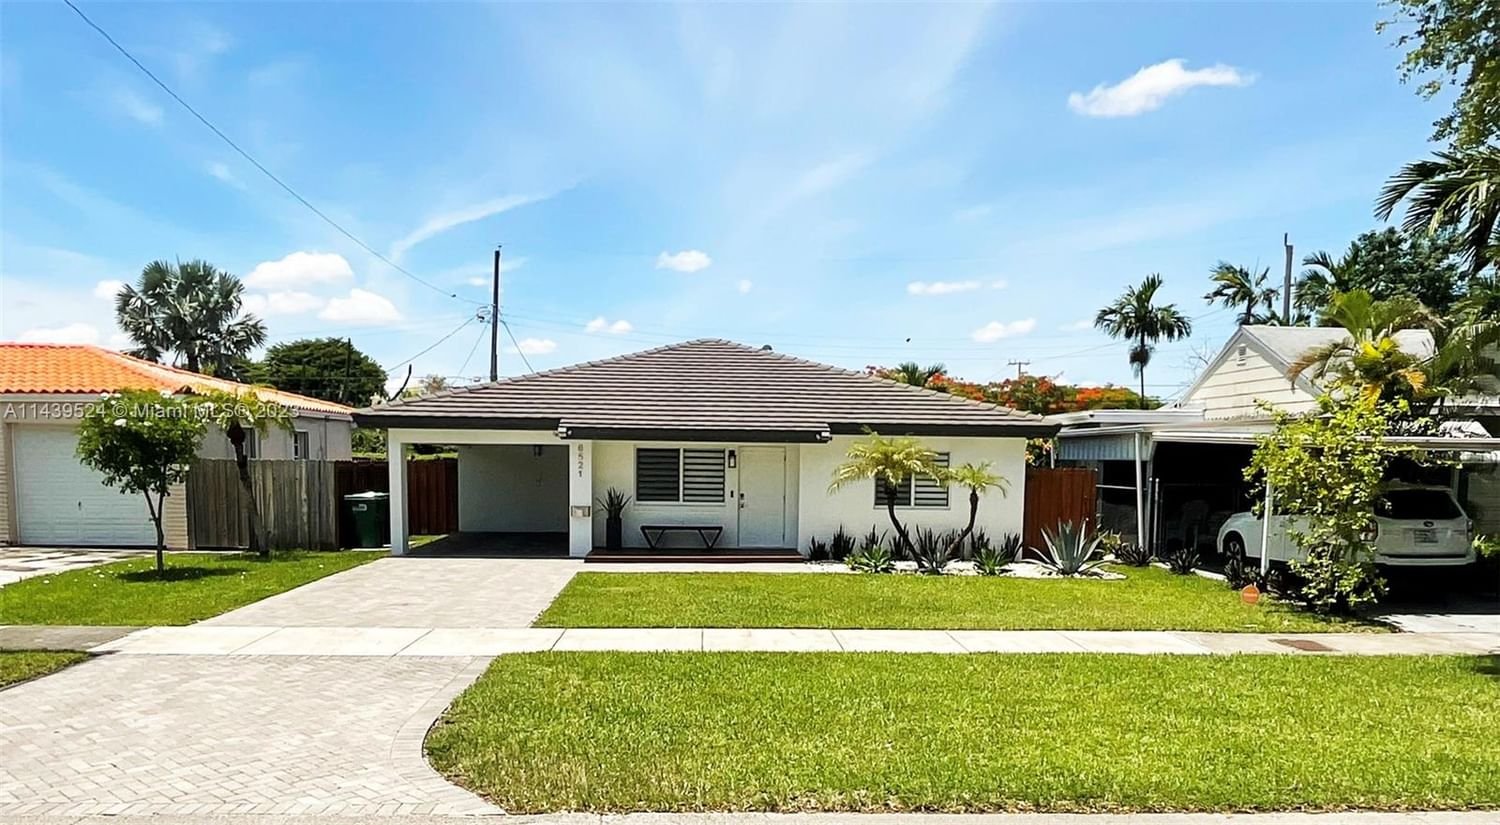 Real estate property located at 6521 38th St, Miami-Dade County, Miami, FL